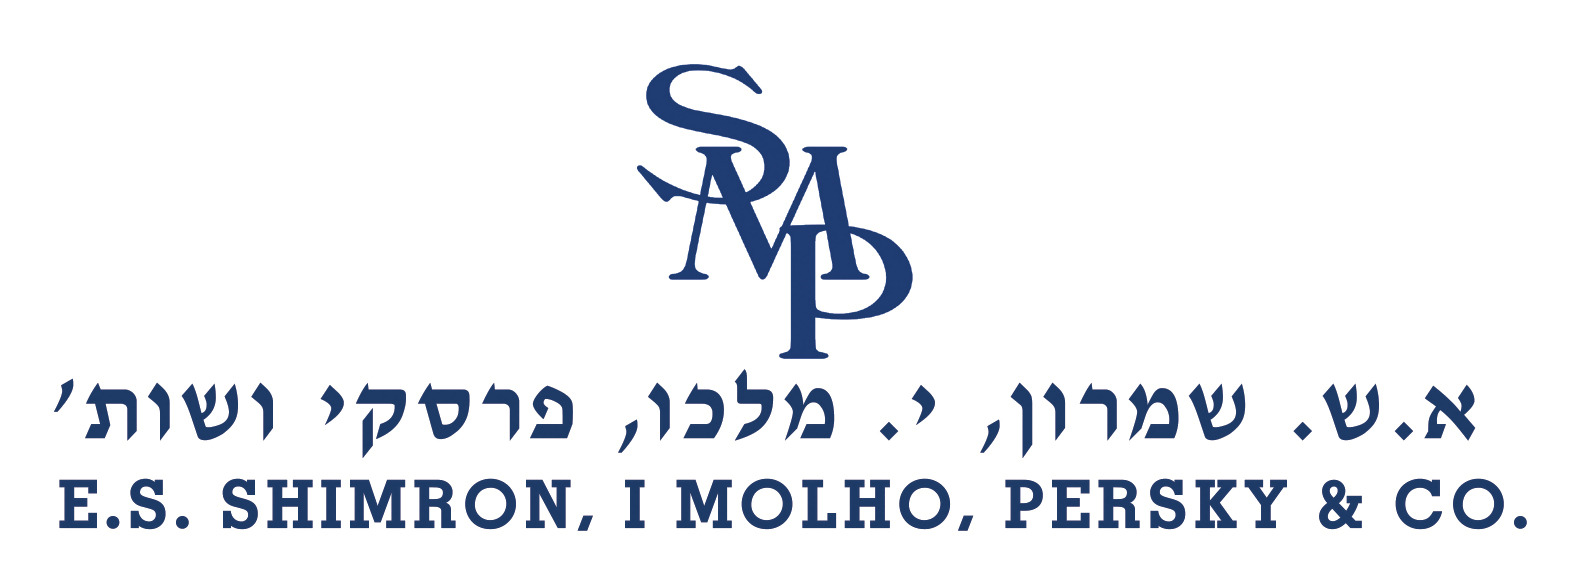 E.S. Shimron, I. Molho, Persky & Co - Law Offices & Notary